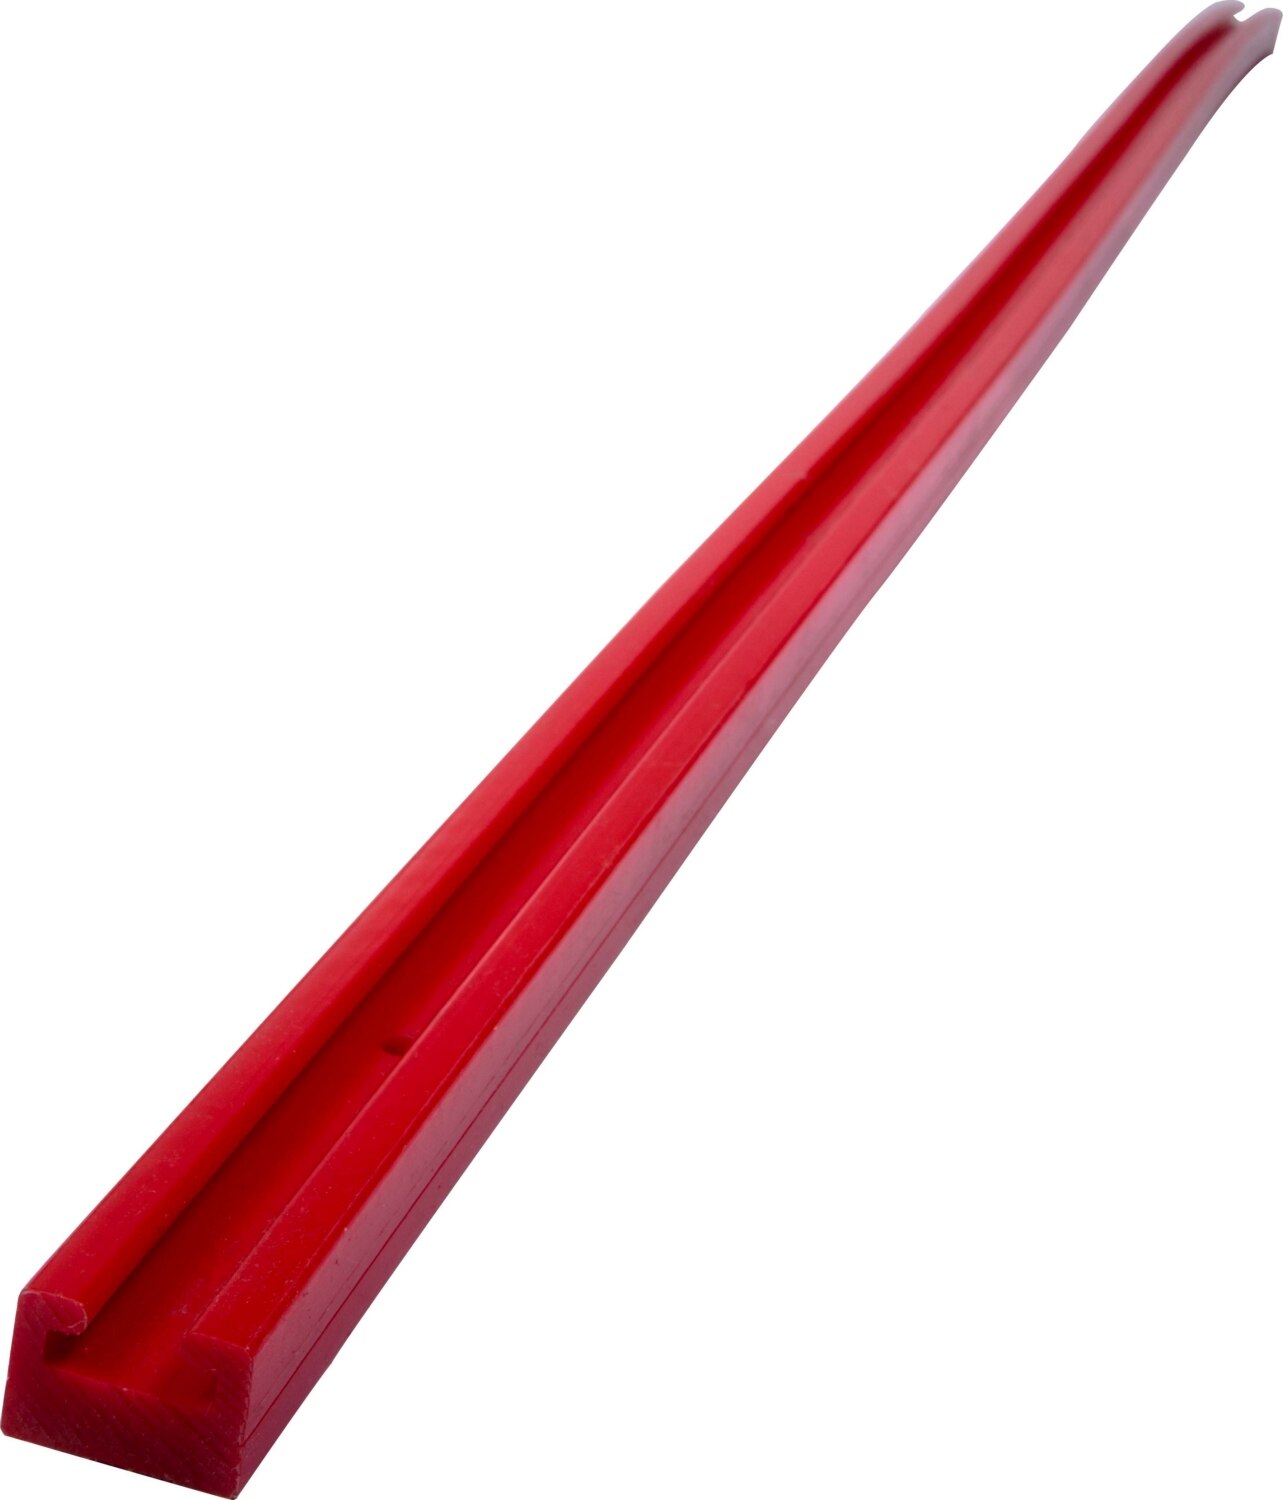 Slide Polaris 172 cm, Röd